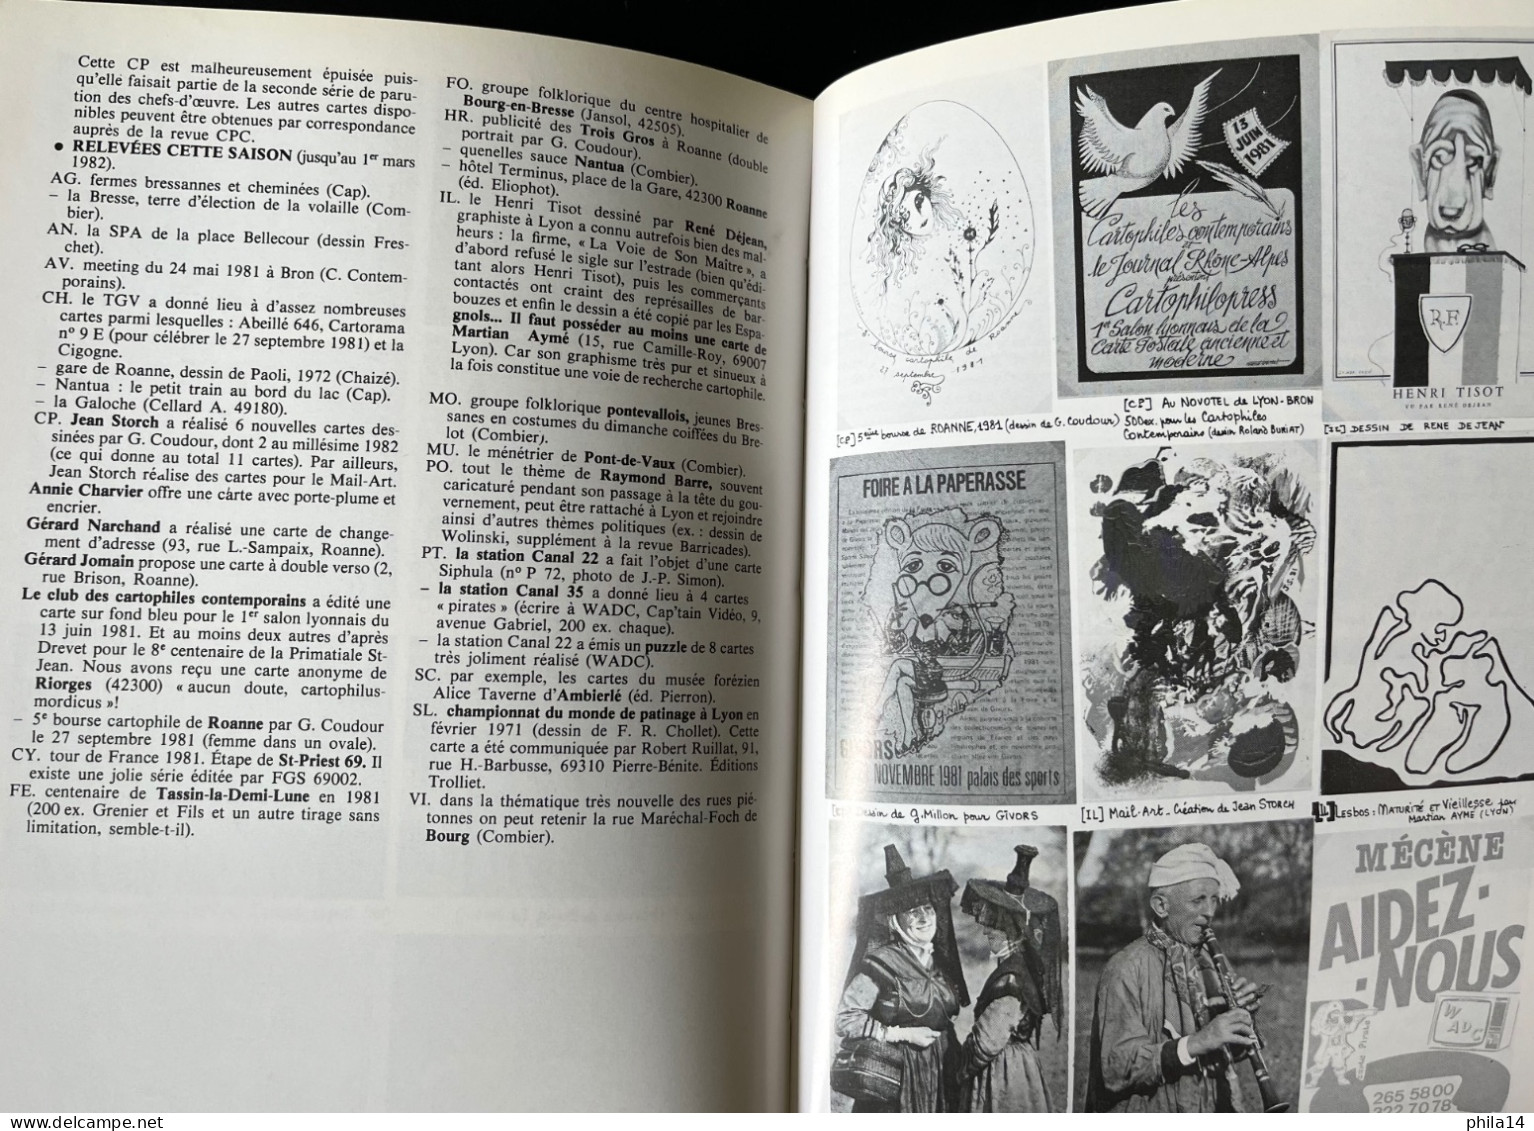 CATALOGUE NEUDIN LYONNAIS BEAUJOLAIS BRESSE FOREZ TOME 3 / 1982 / 192 PAGES - Libros & Catálogos